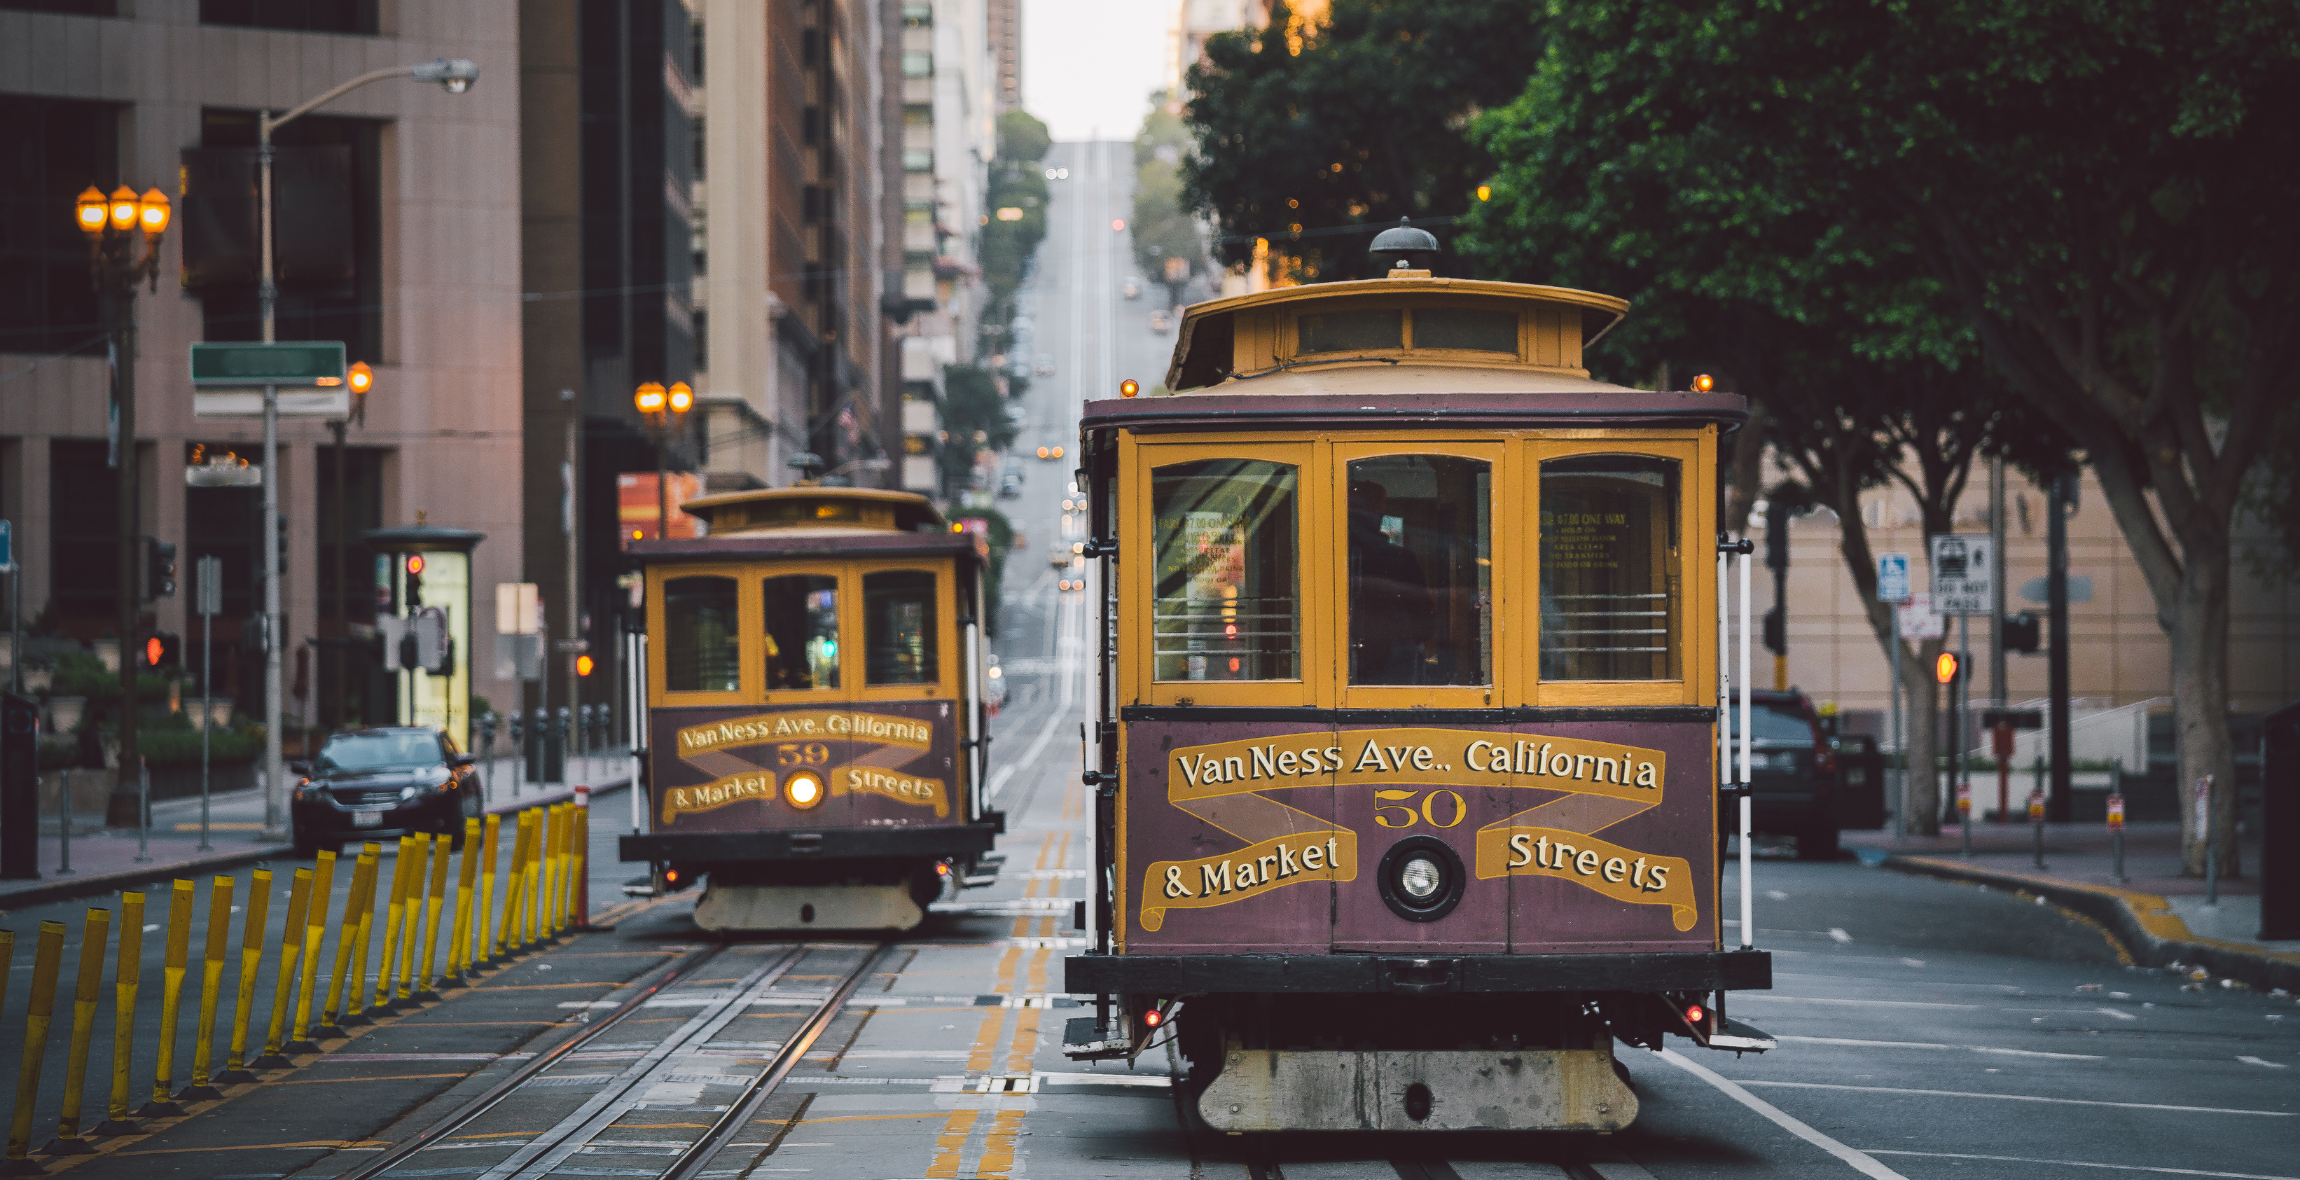 San Francisco Cable Cars on California Street, California, USA